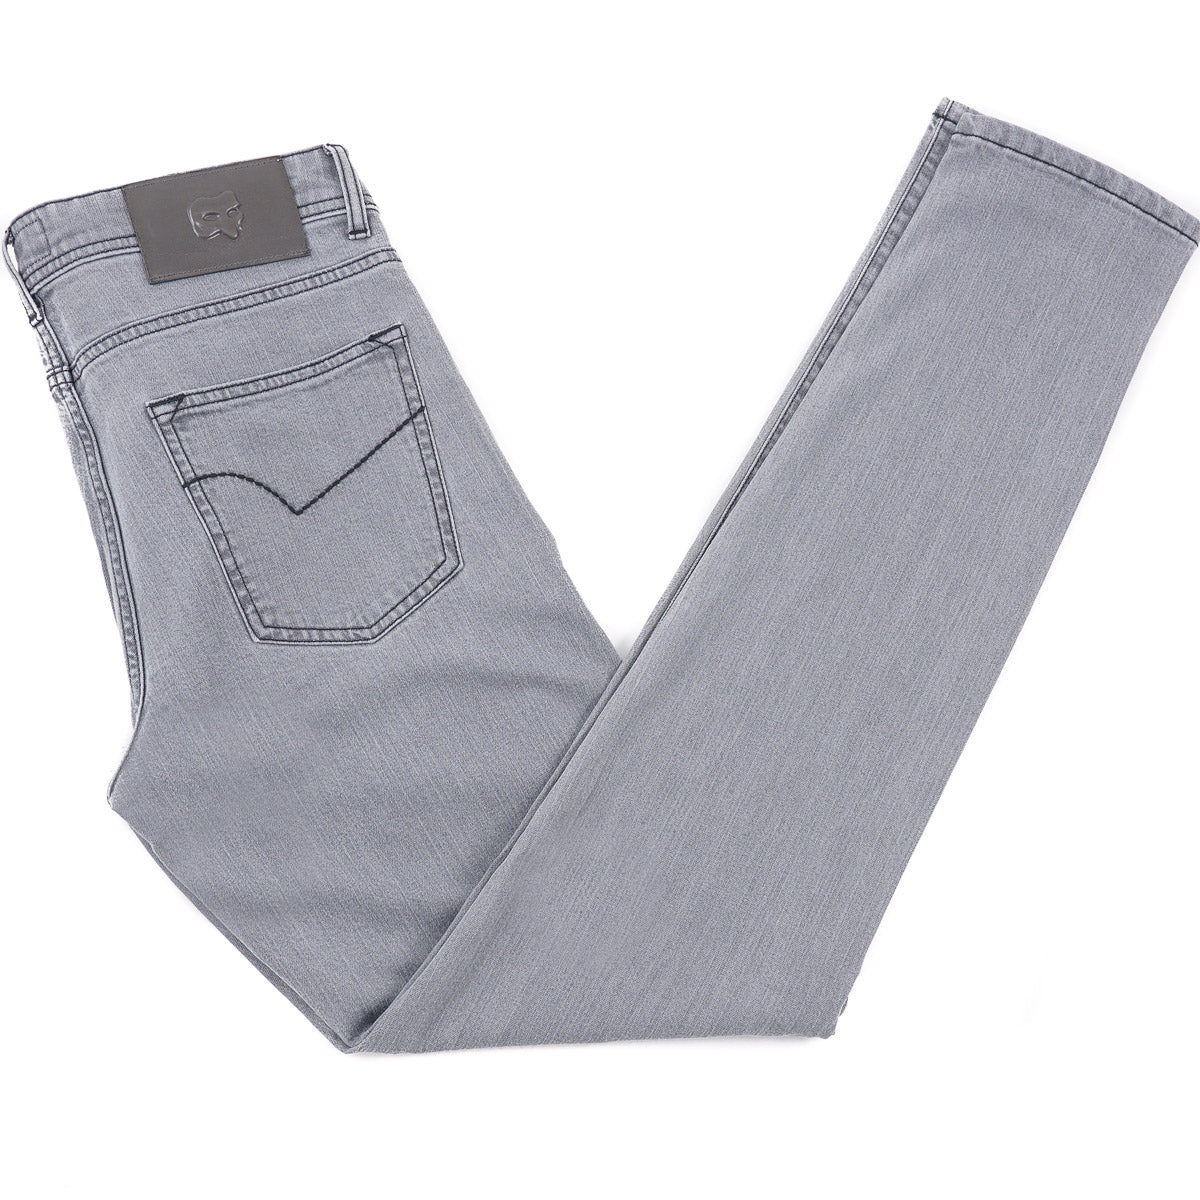 Marco Pescarolo Cotton and Cashmere Jeans - Top Shelf Apparel